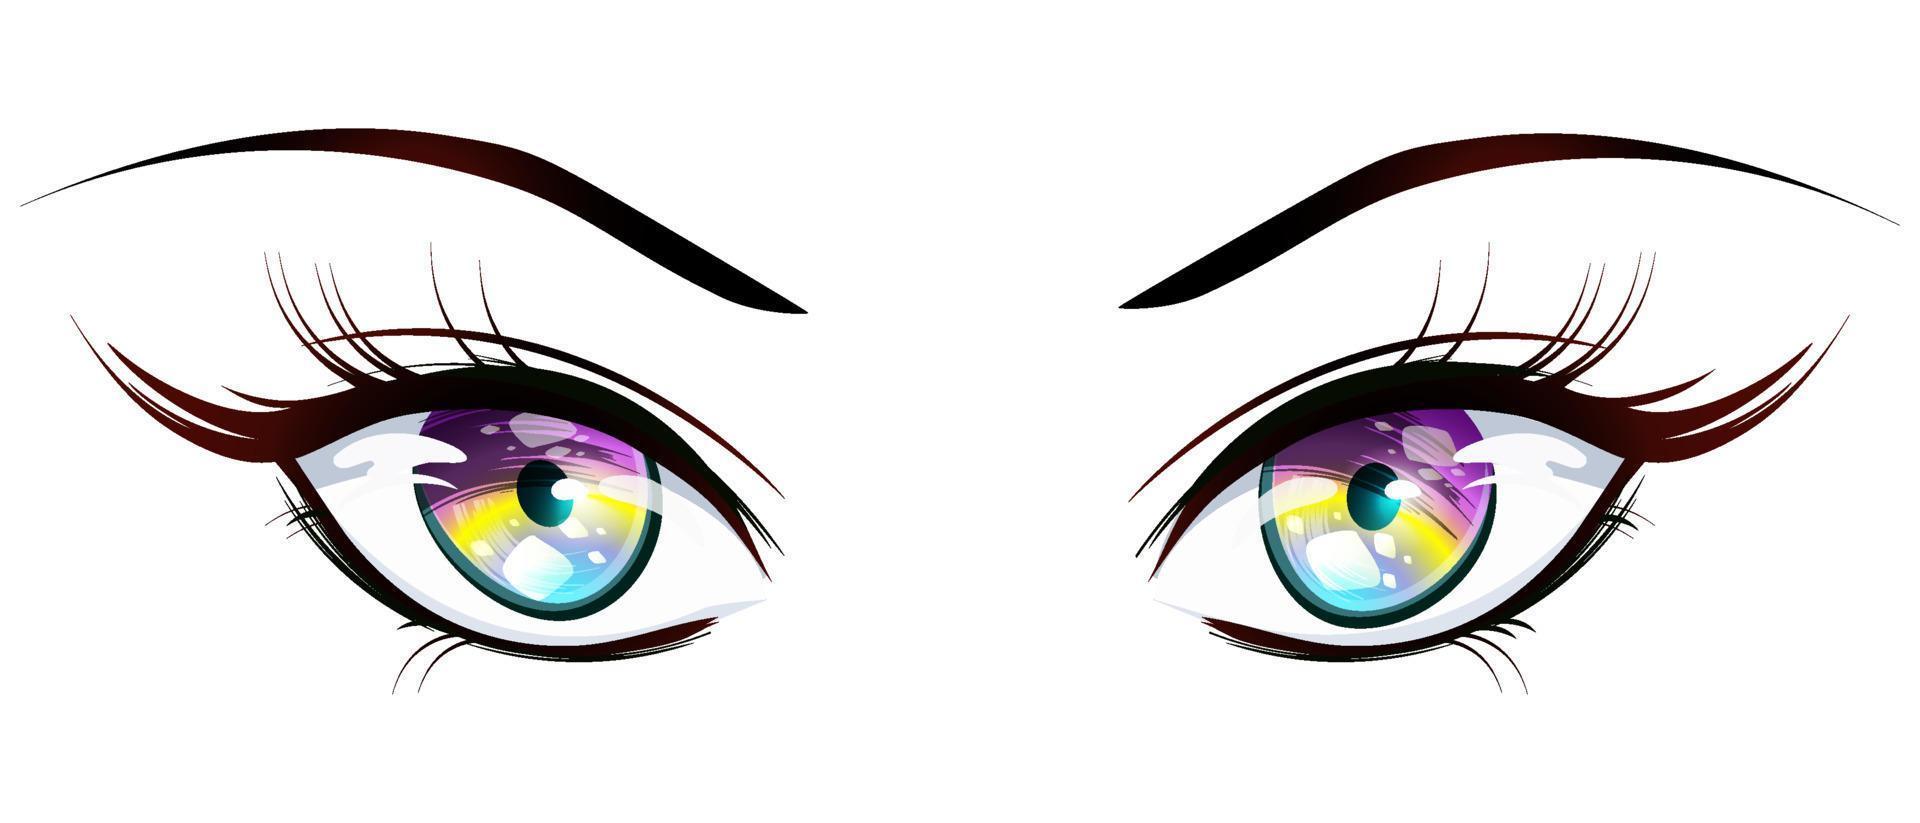 Download Eyes, Anime Eyes, Cartoon Eyes. Royalty-Free Vector